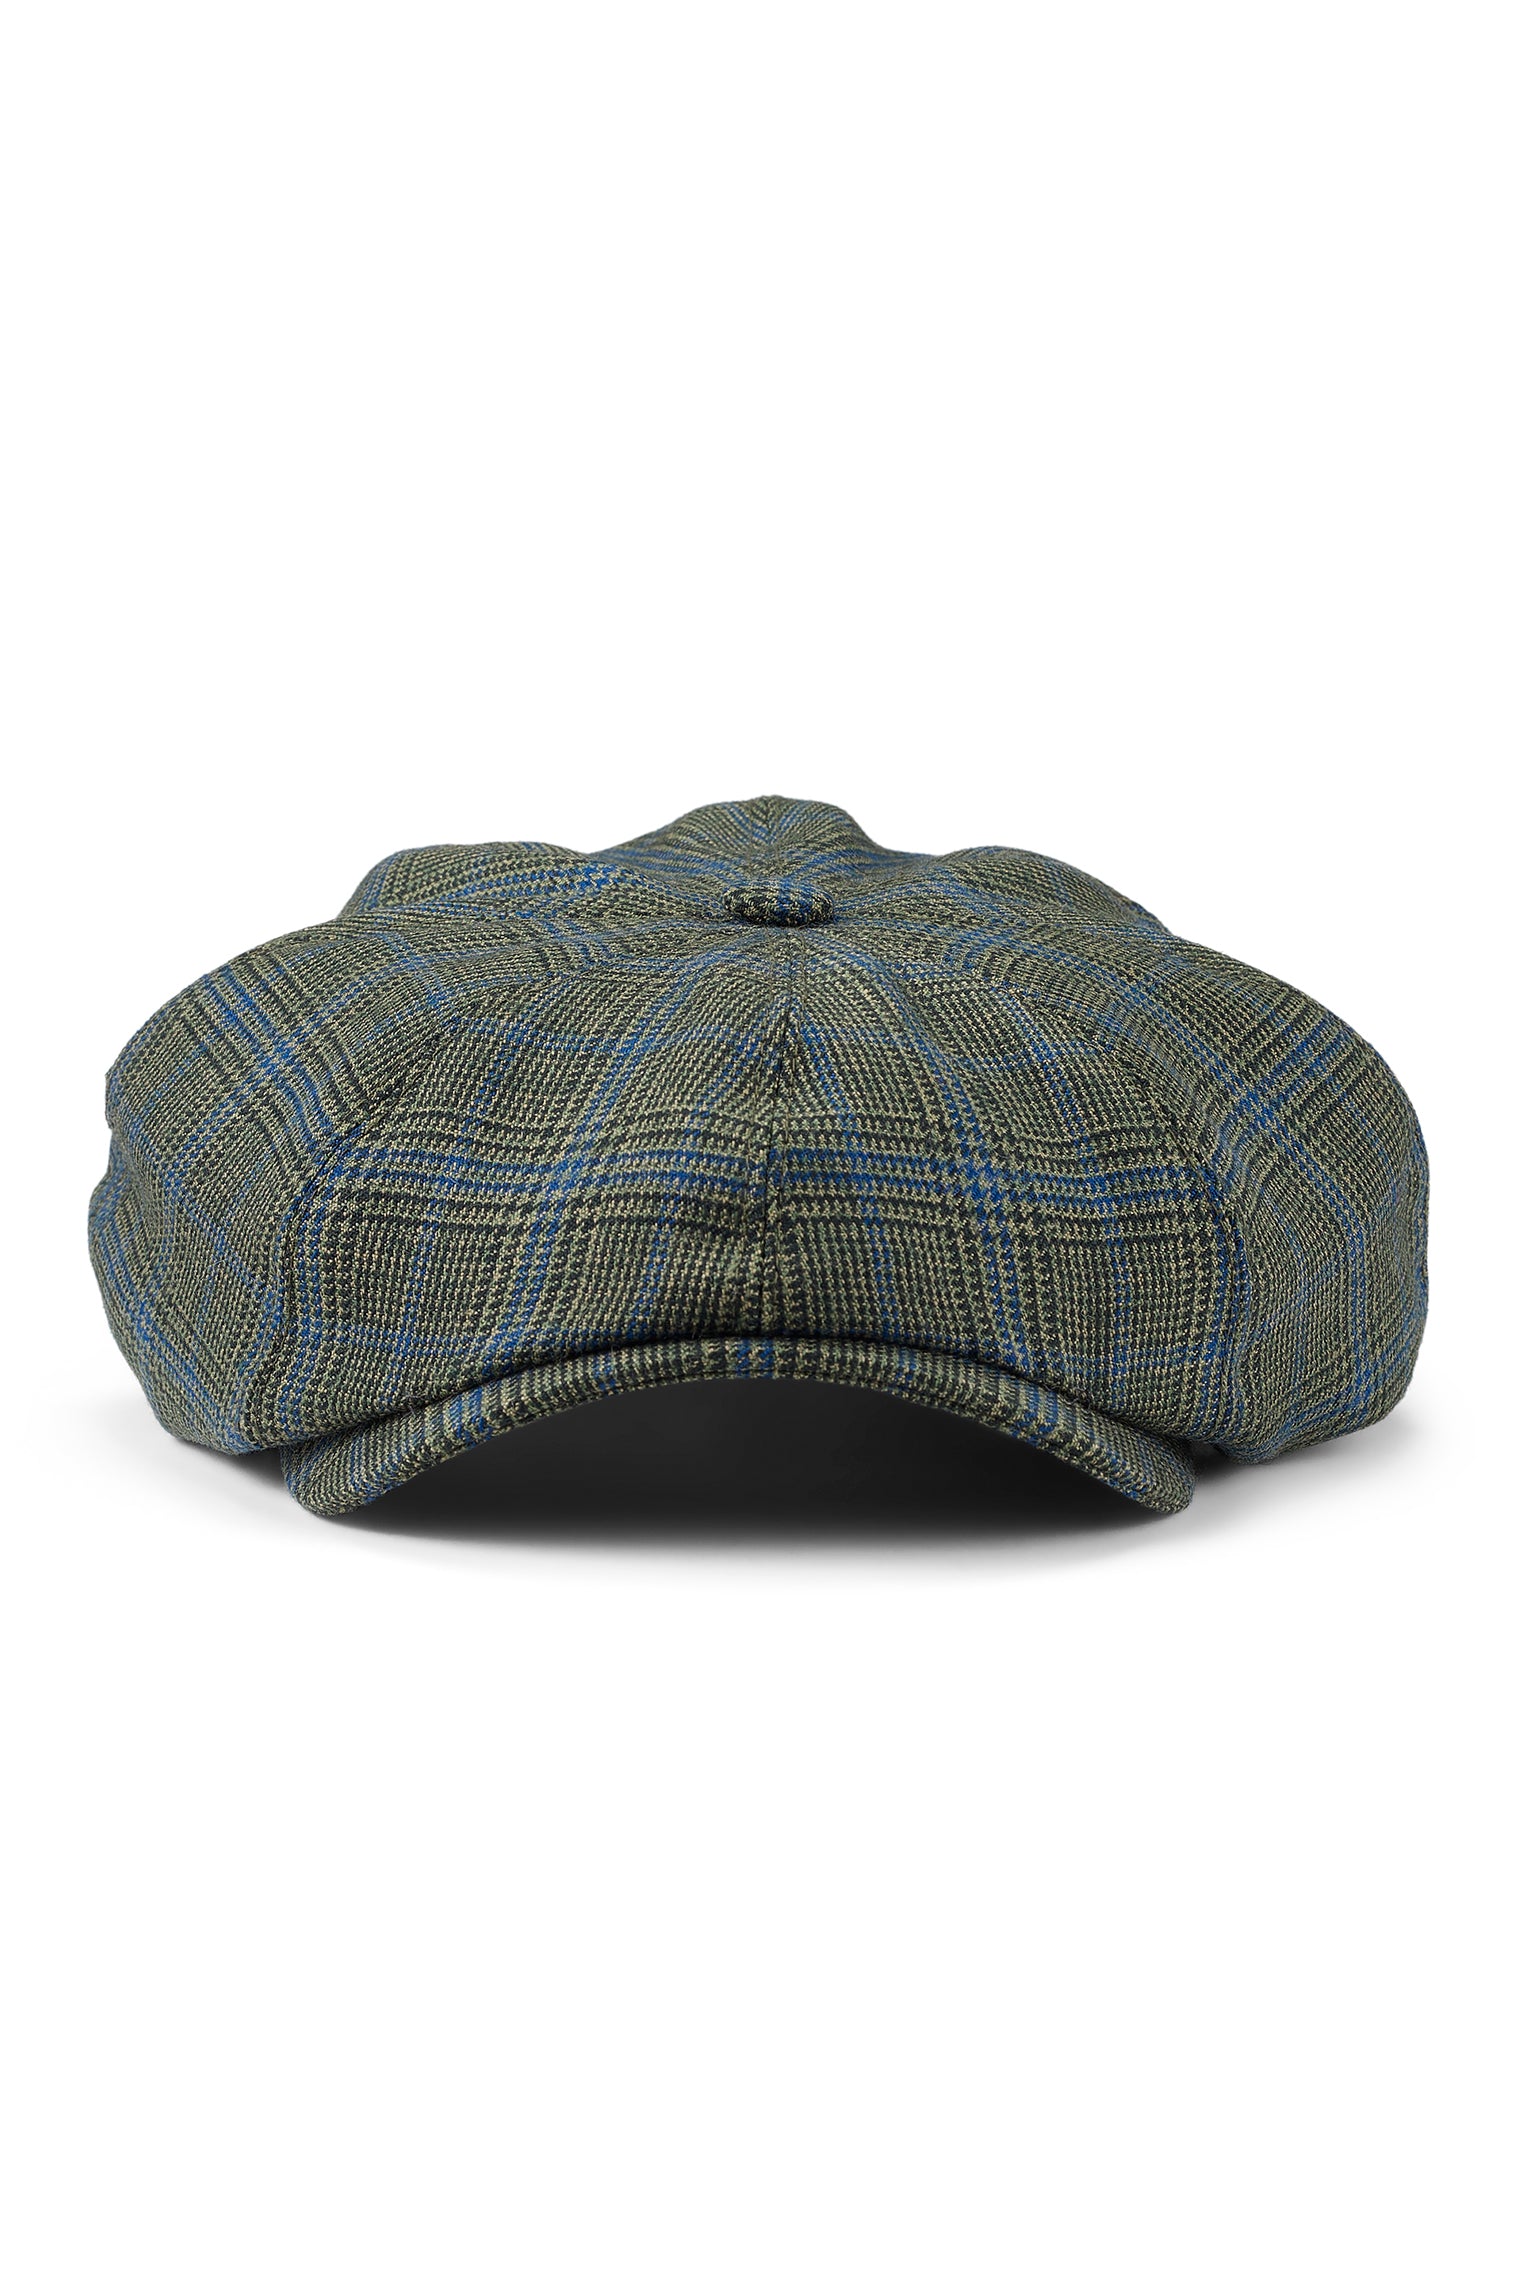 Highgrove Green Bakerboy Cap - New Season Hat Collection - Lock & Co. Hatters London UK